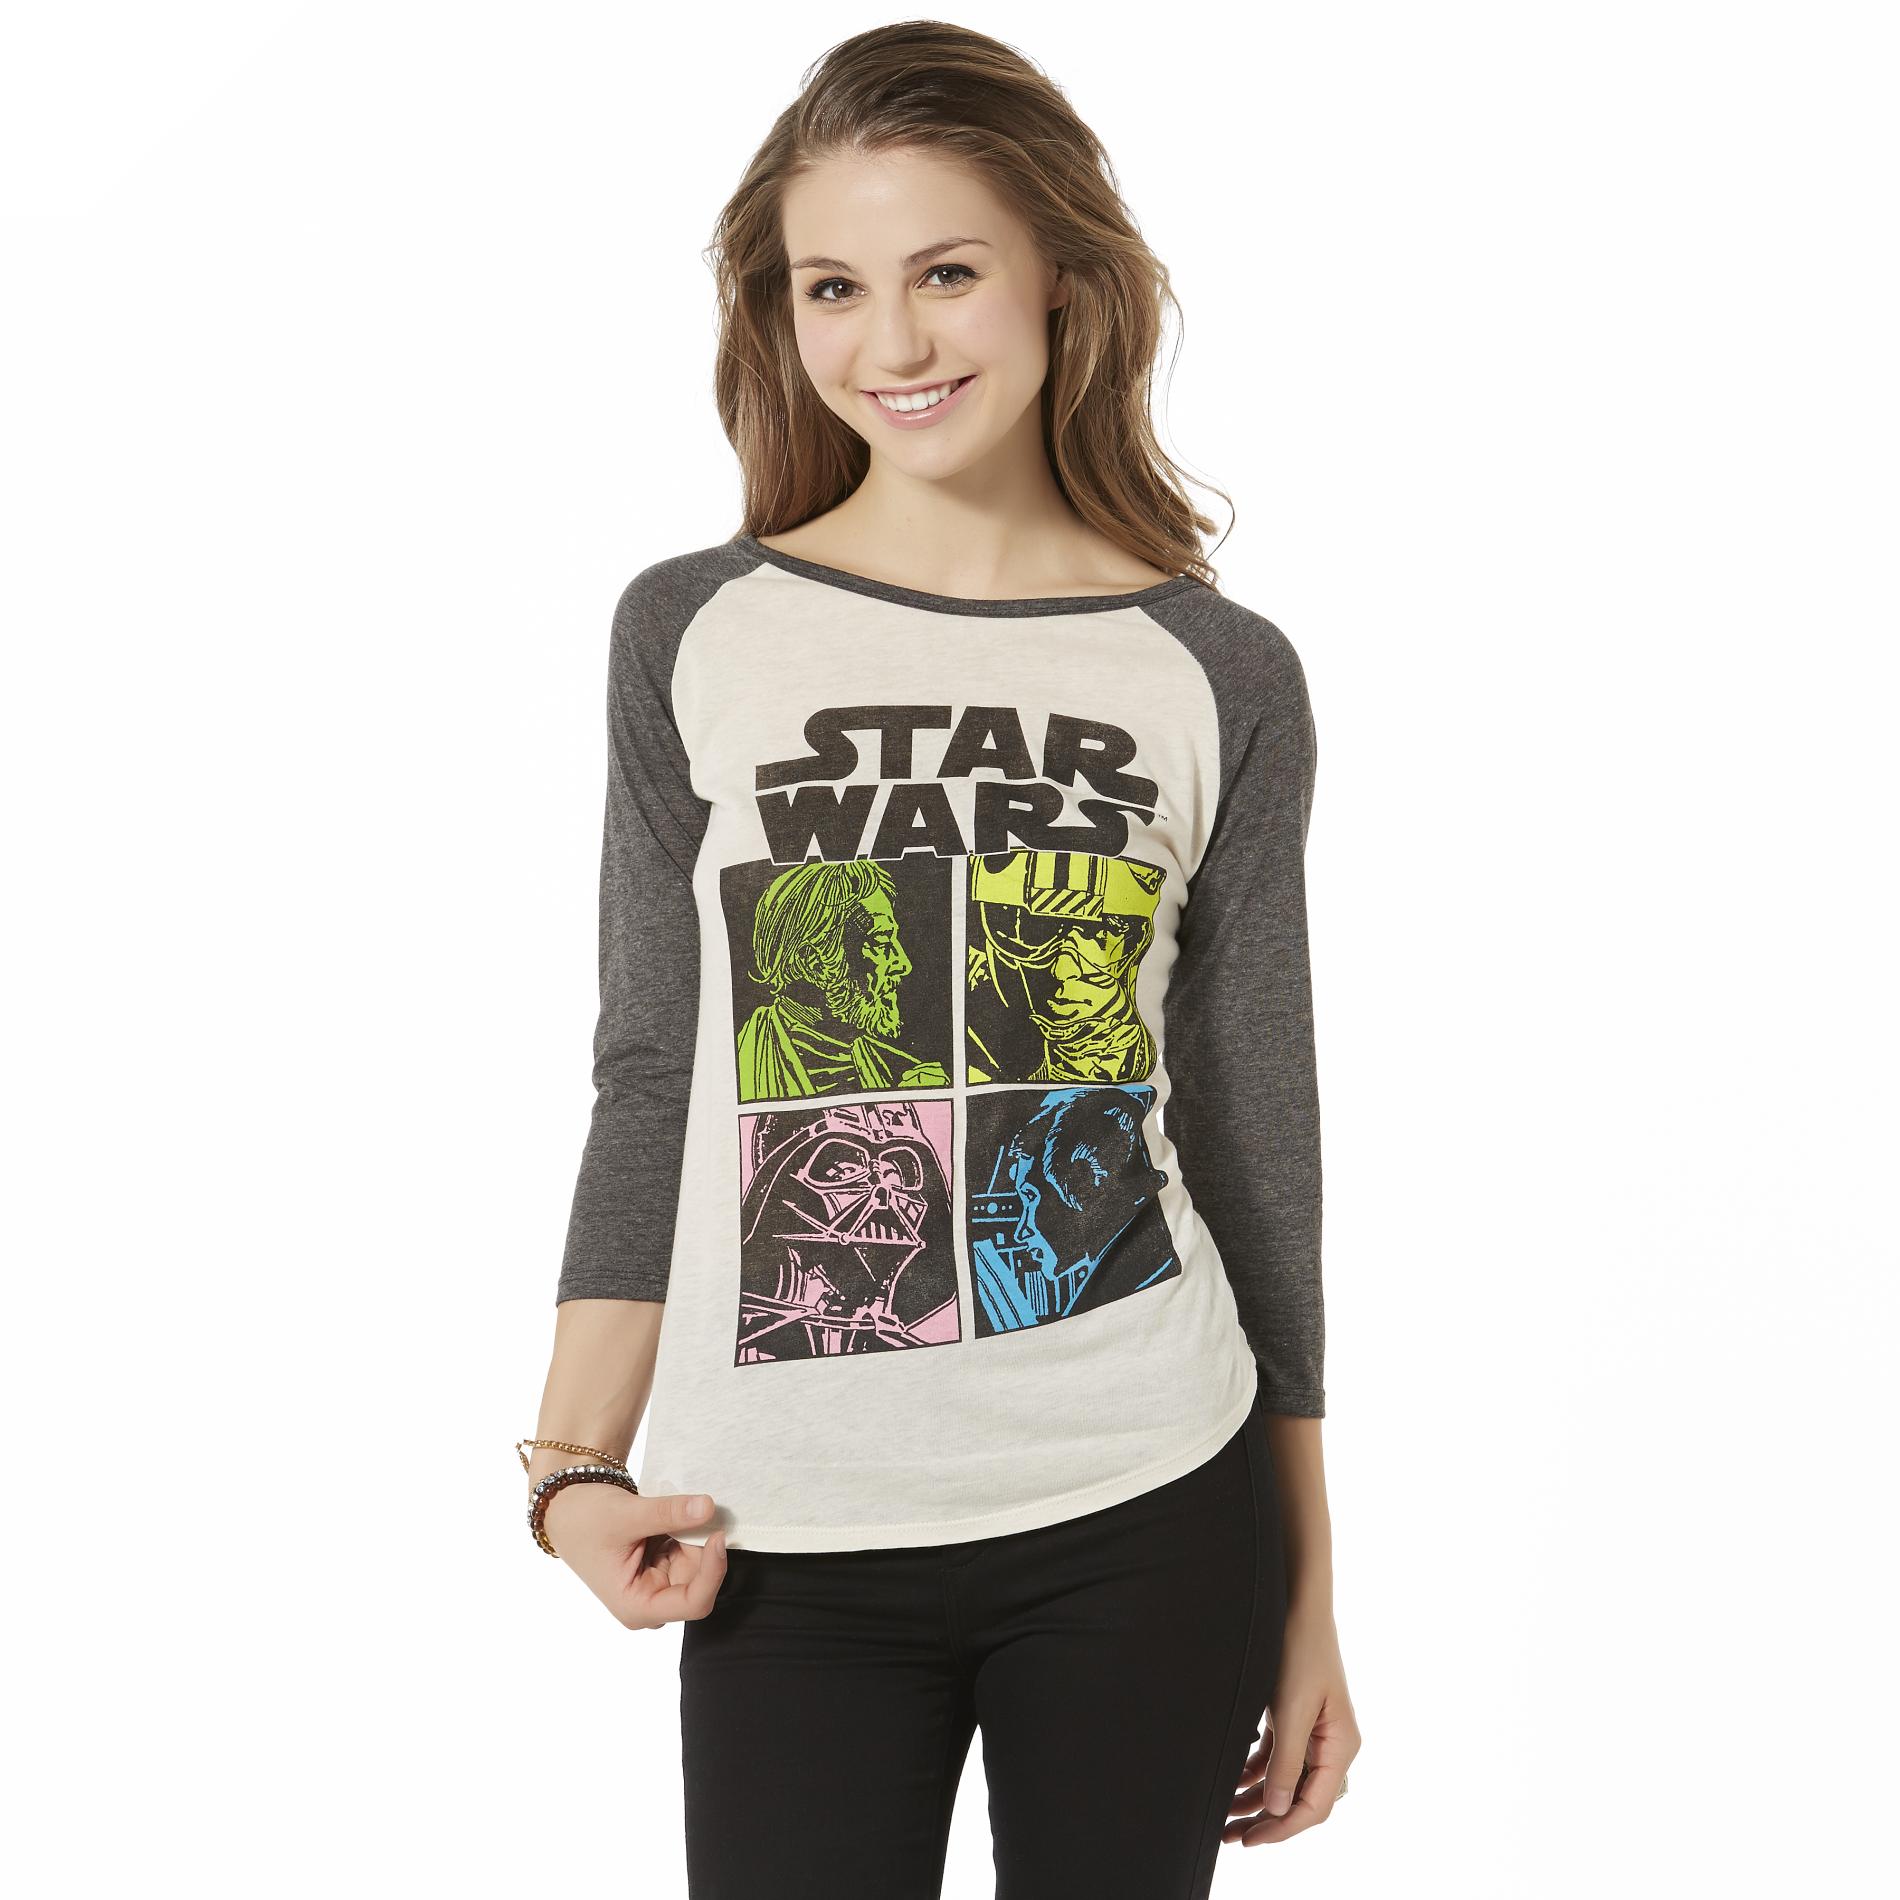 Lucasfilm Star Wars Junior's Graphic T-Shirt